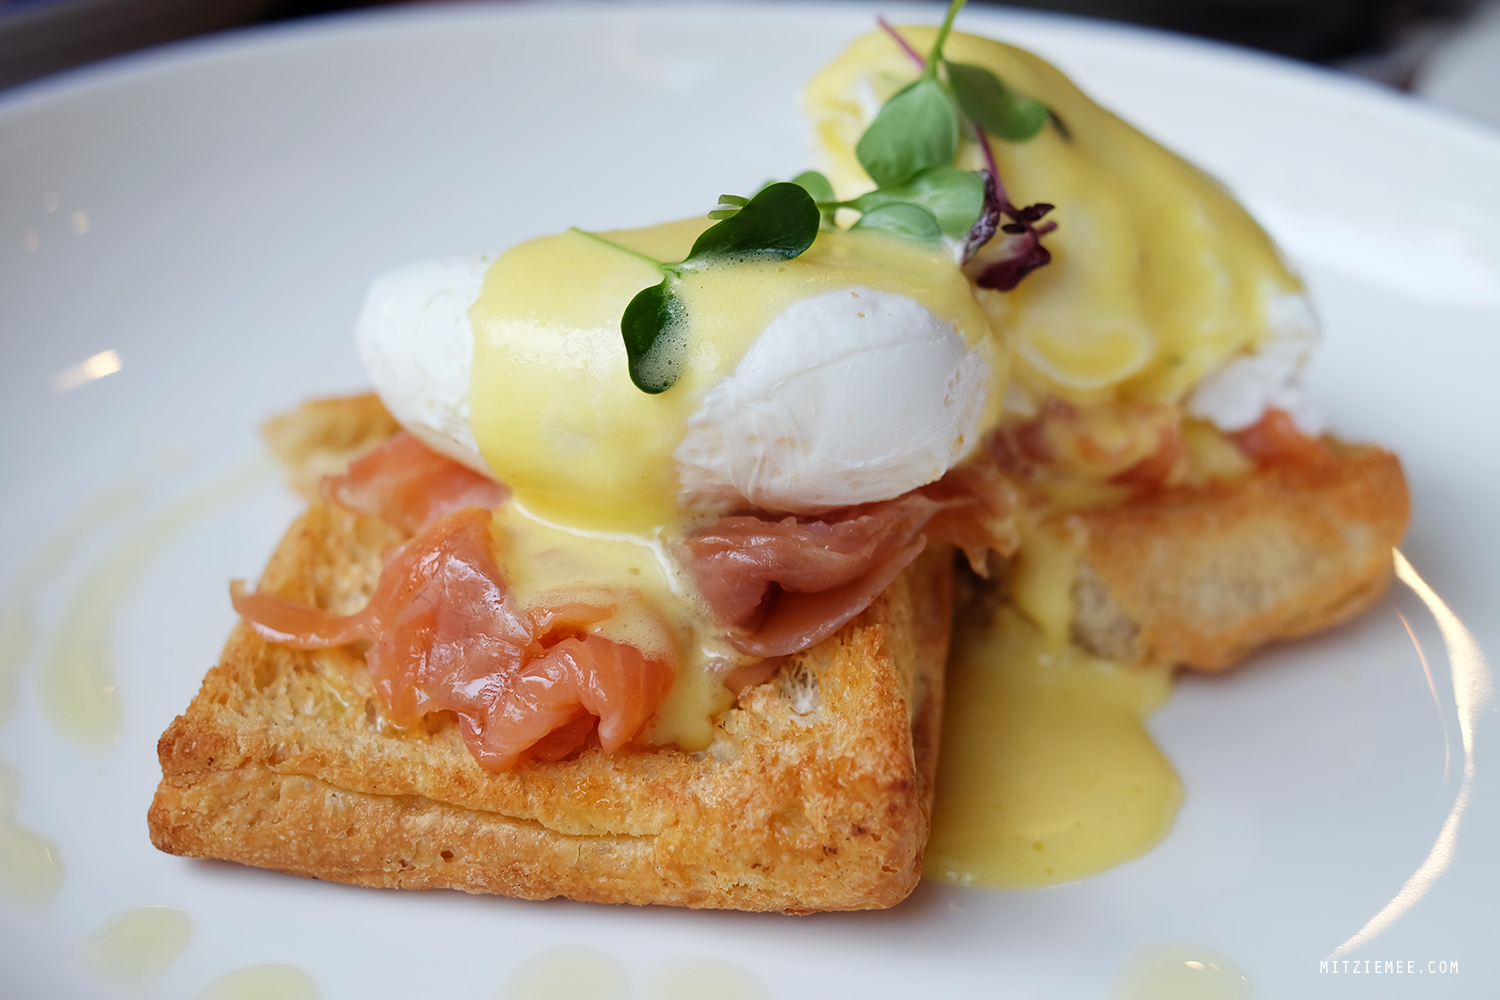 Eggs Benedict with salmon at The Coffee Club Dubai